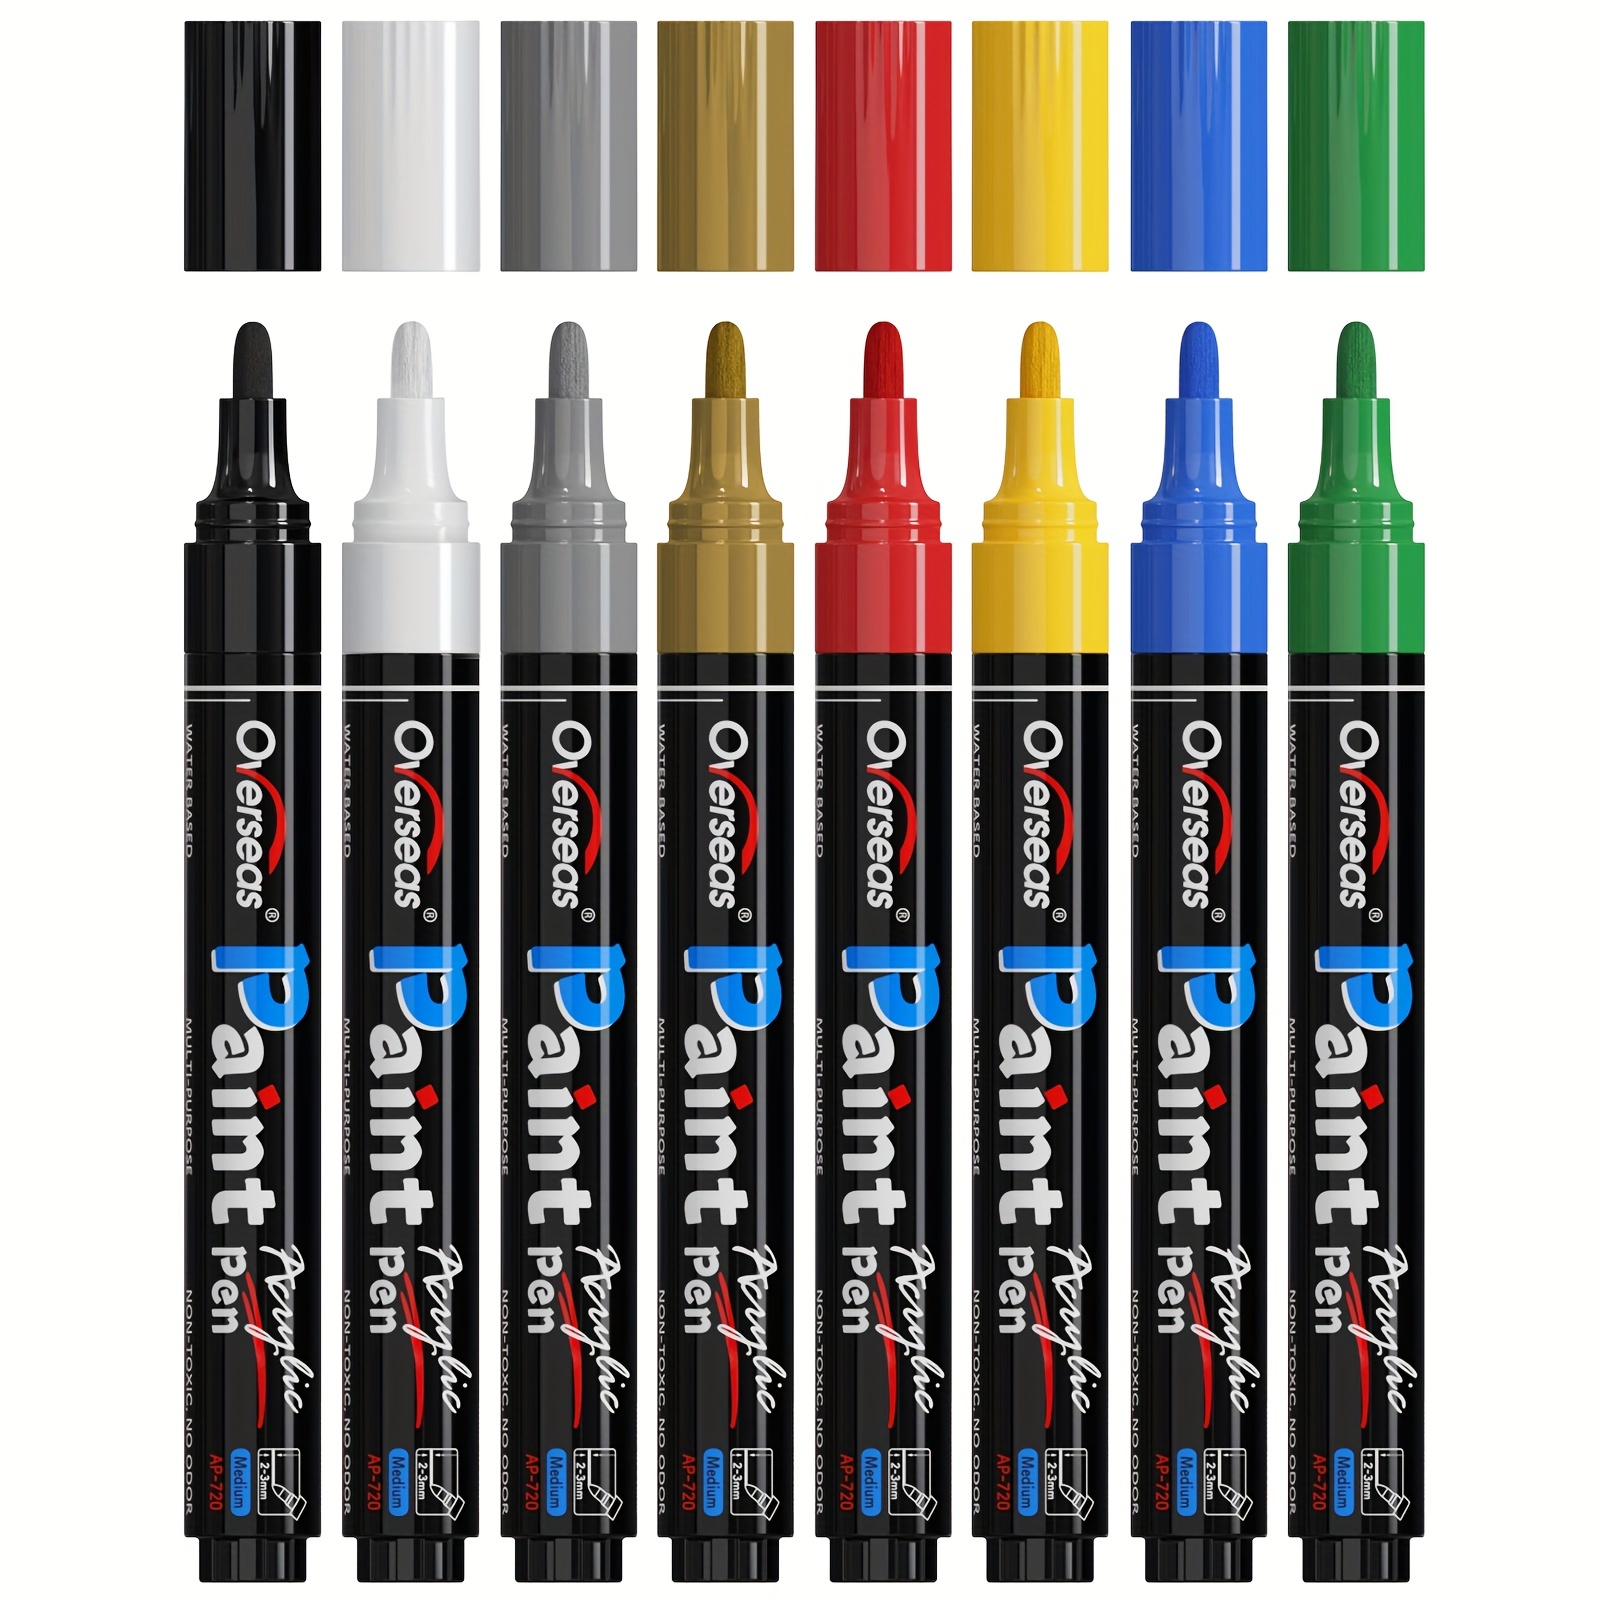 Water Based Paint Markers Pens,Medium Point,Works on Plastic,Wood